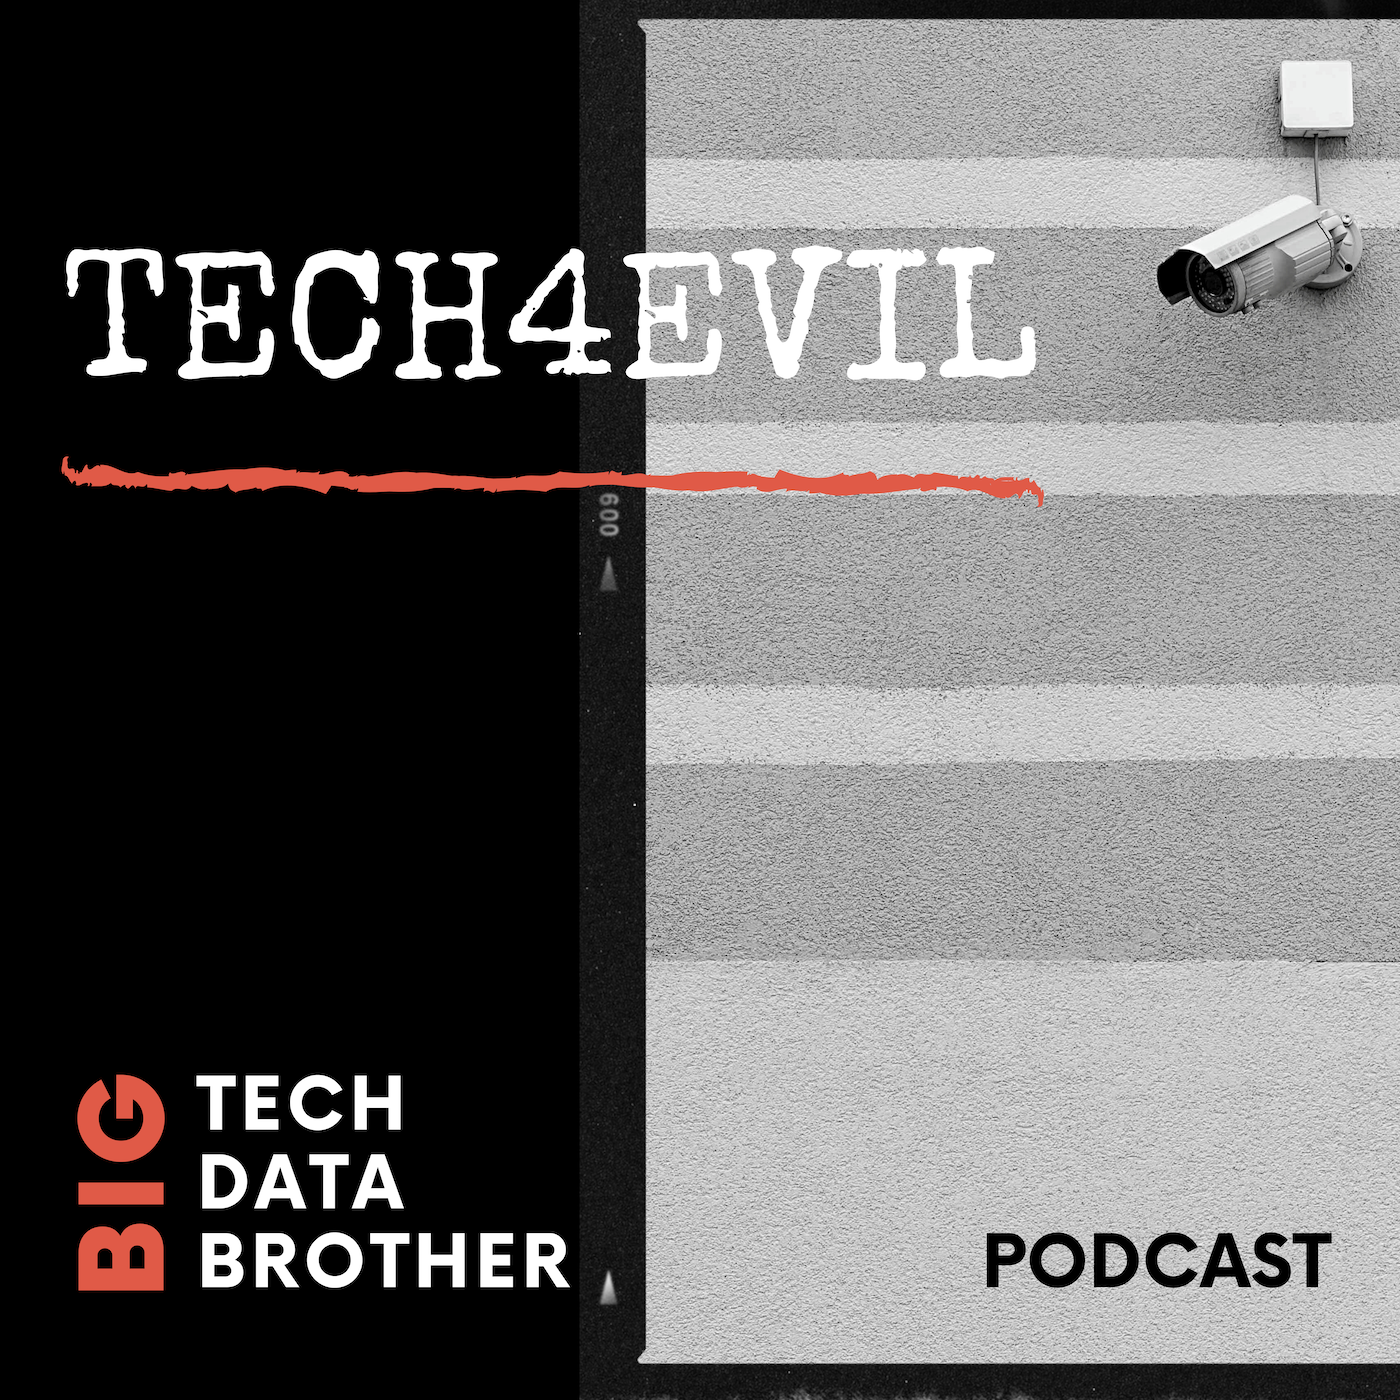 Don't Click Here - Tech4Evil Season 3 Teaser